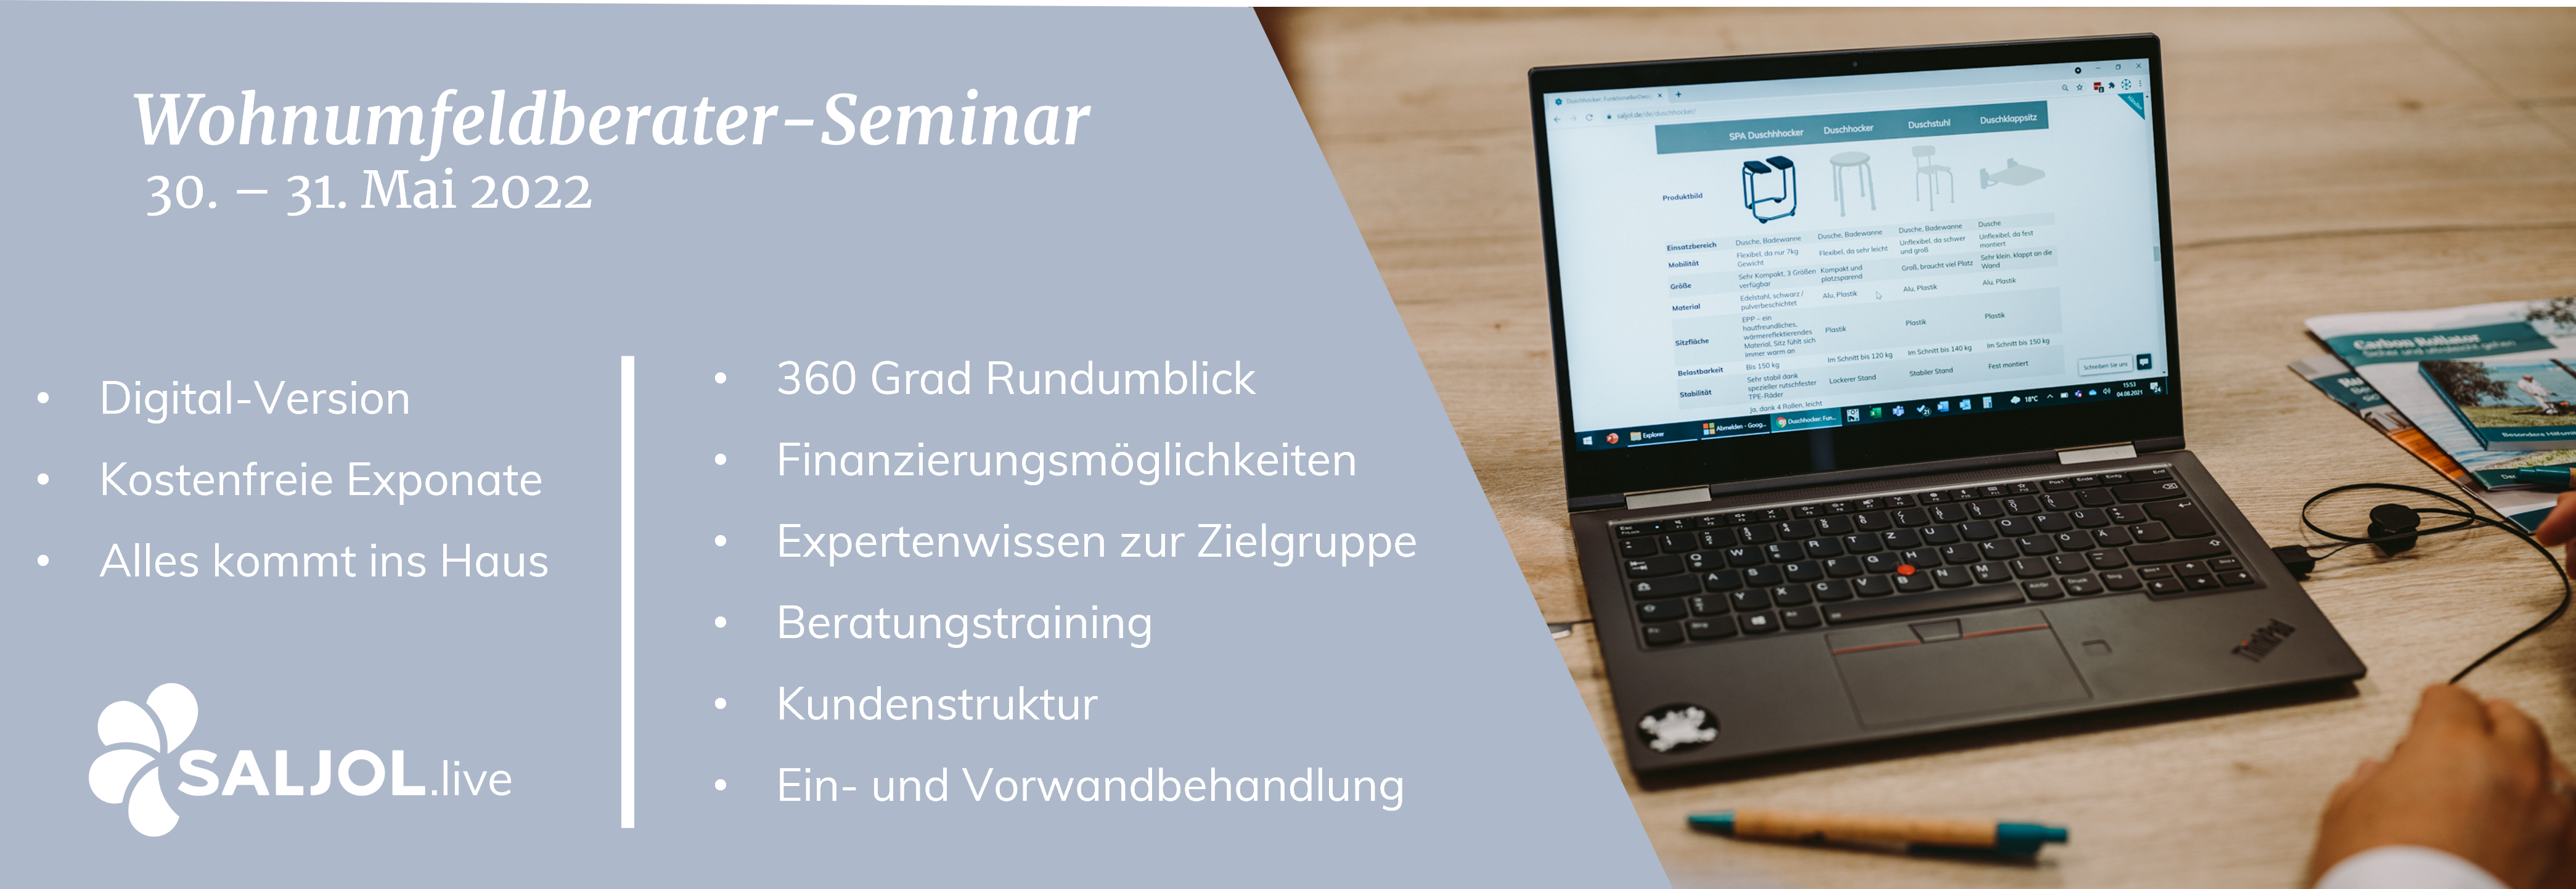 Wohnumfeldberater-Seminar | Digital